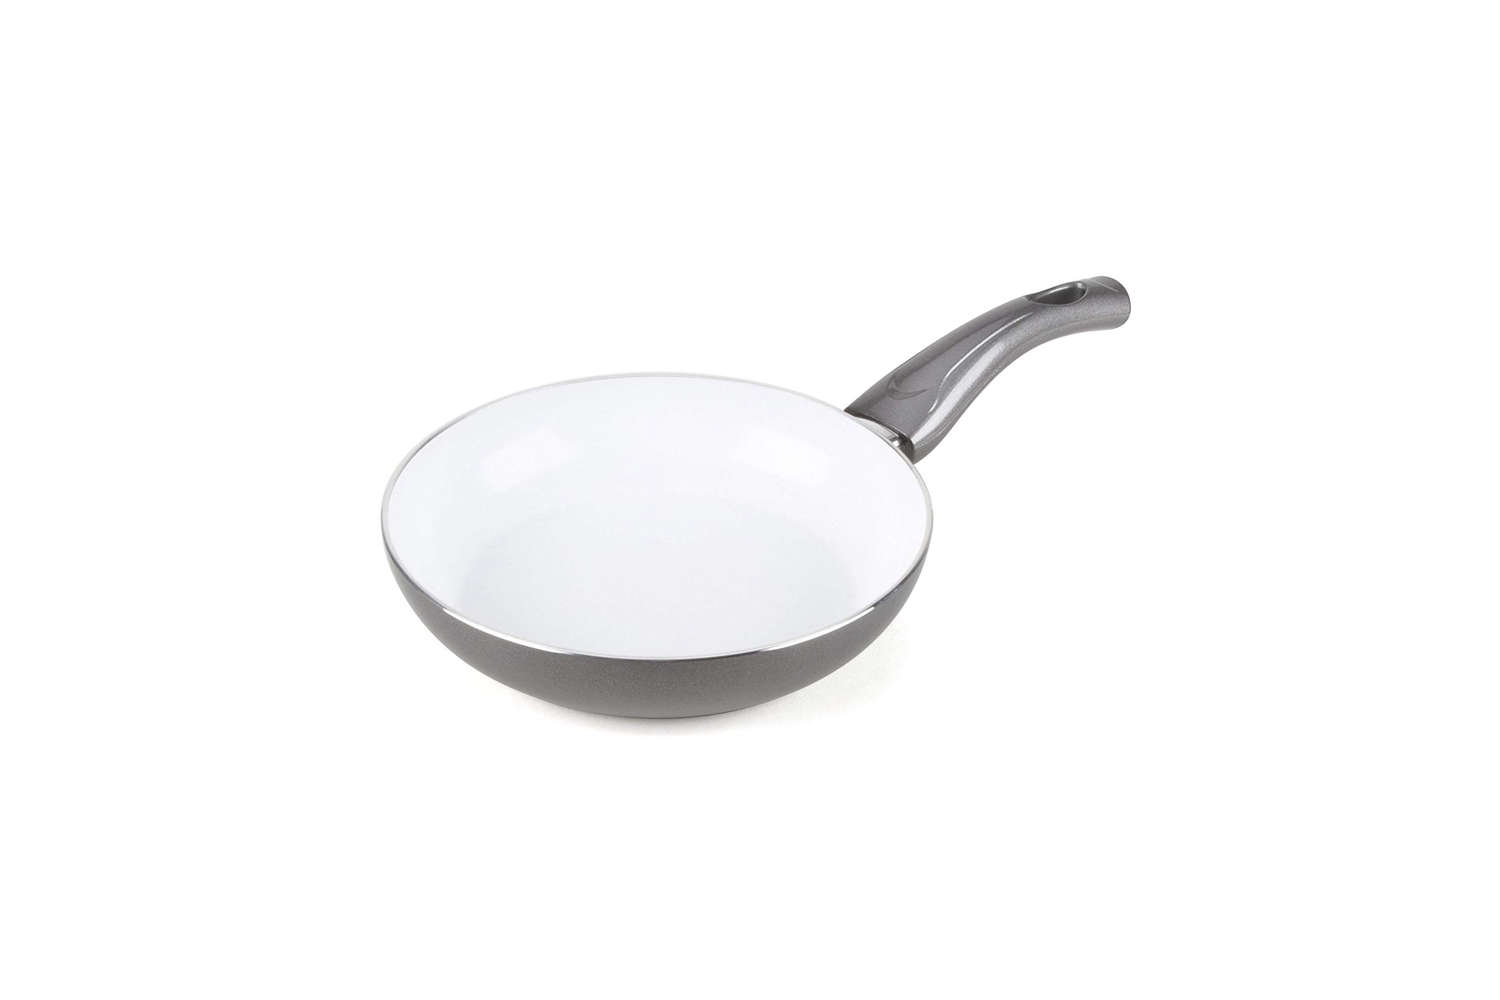 Bialetti Ceramic Pro Fry Pan